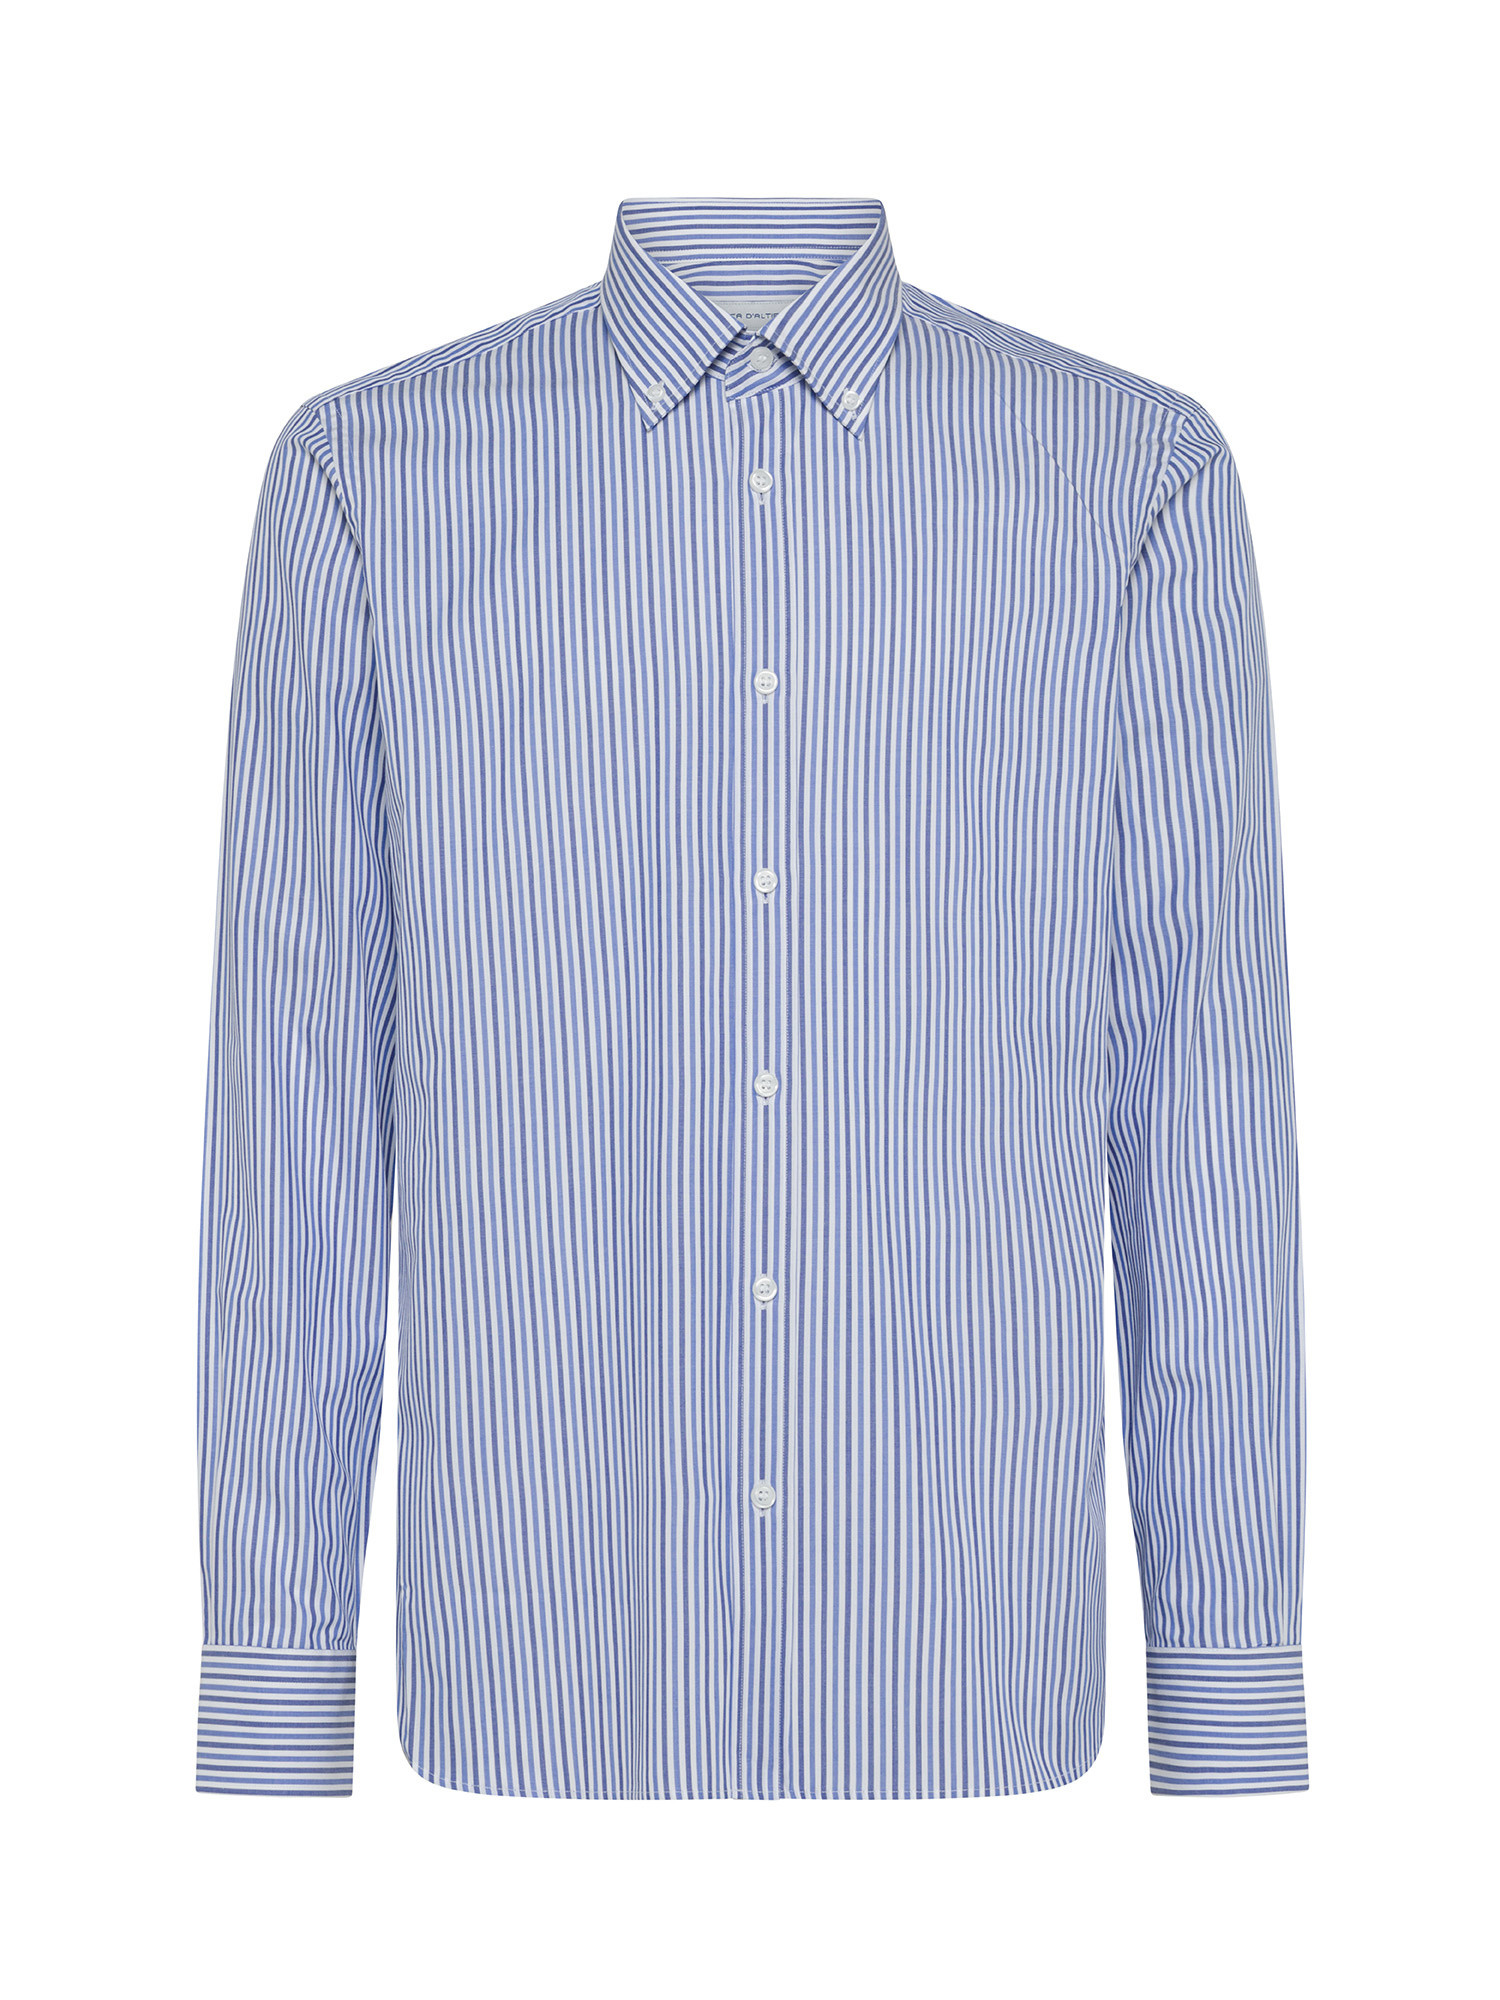 Luca D'Altieri - Tailor fit shirt in pure cotton, Blue, large image number 0